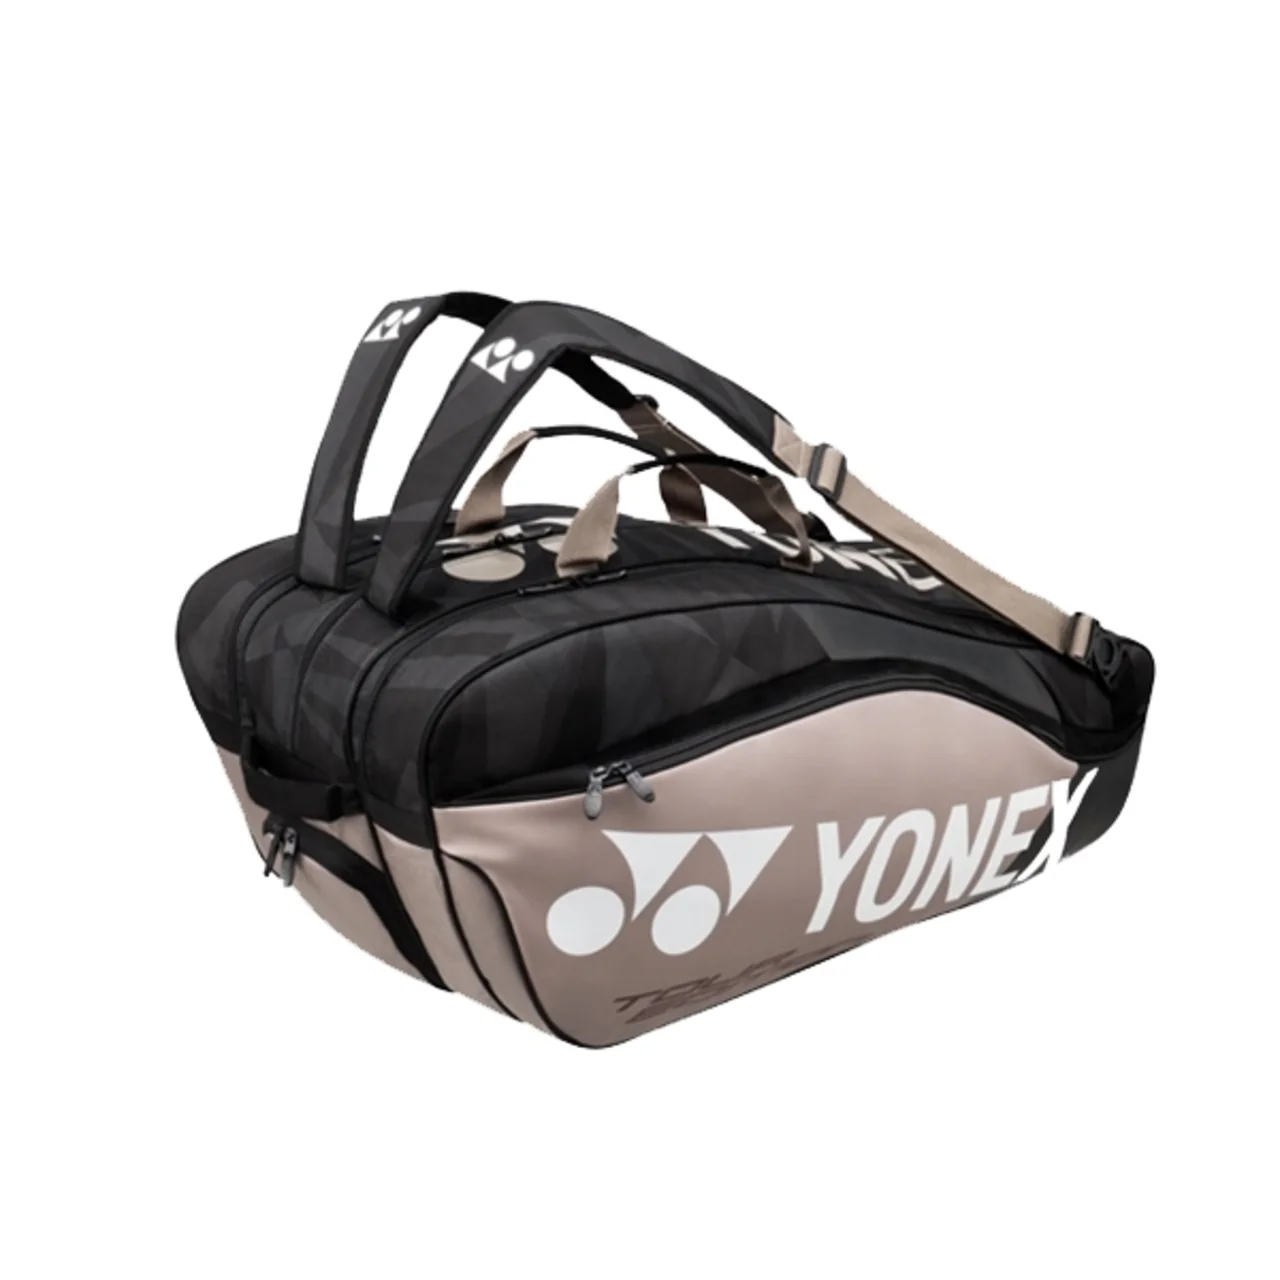 Yonex Pro Bag x9 Platinum 2018